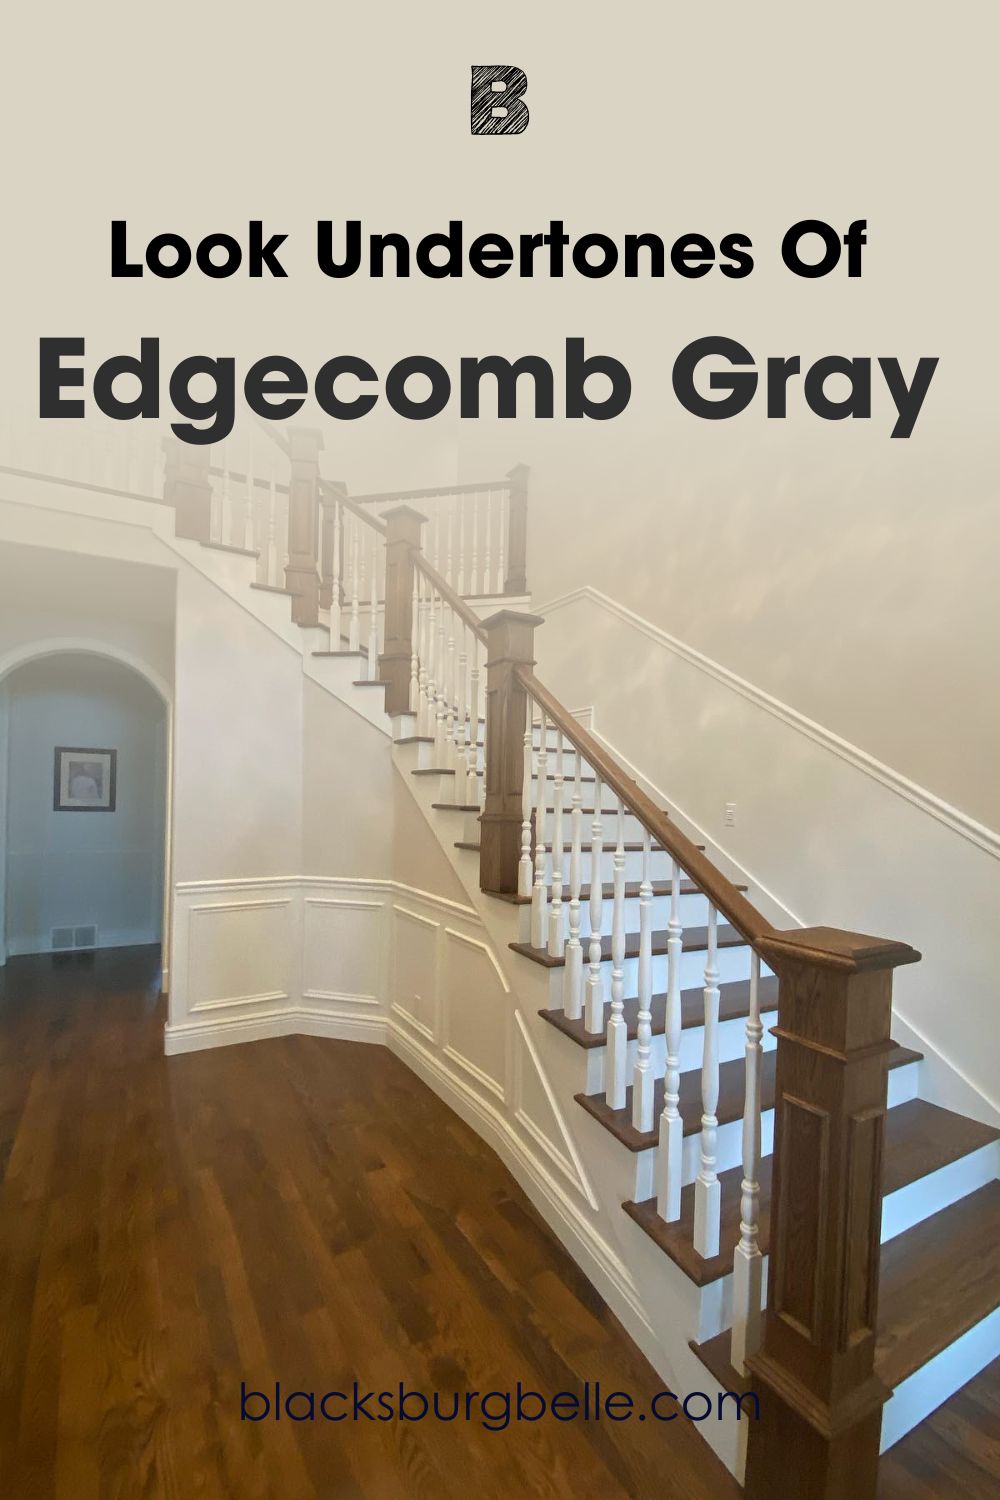 A Closer Look at the Undertones in Edgecomb Gray